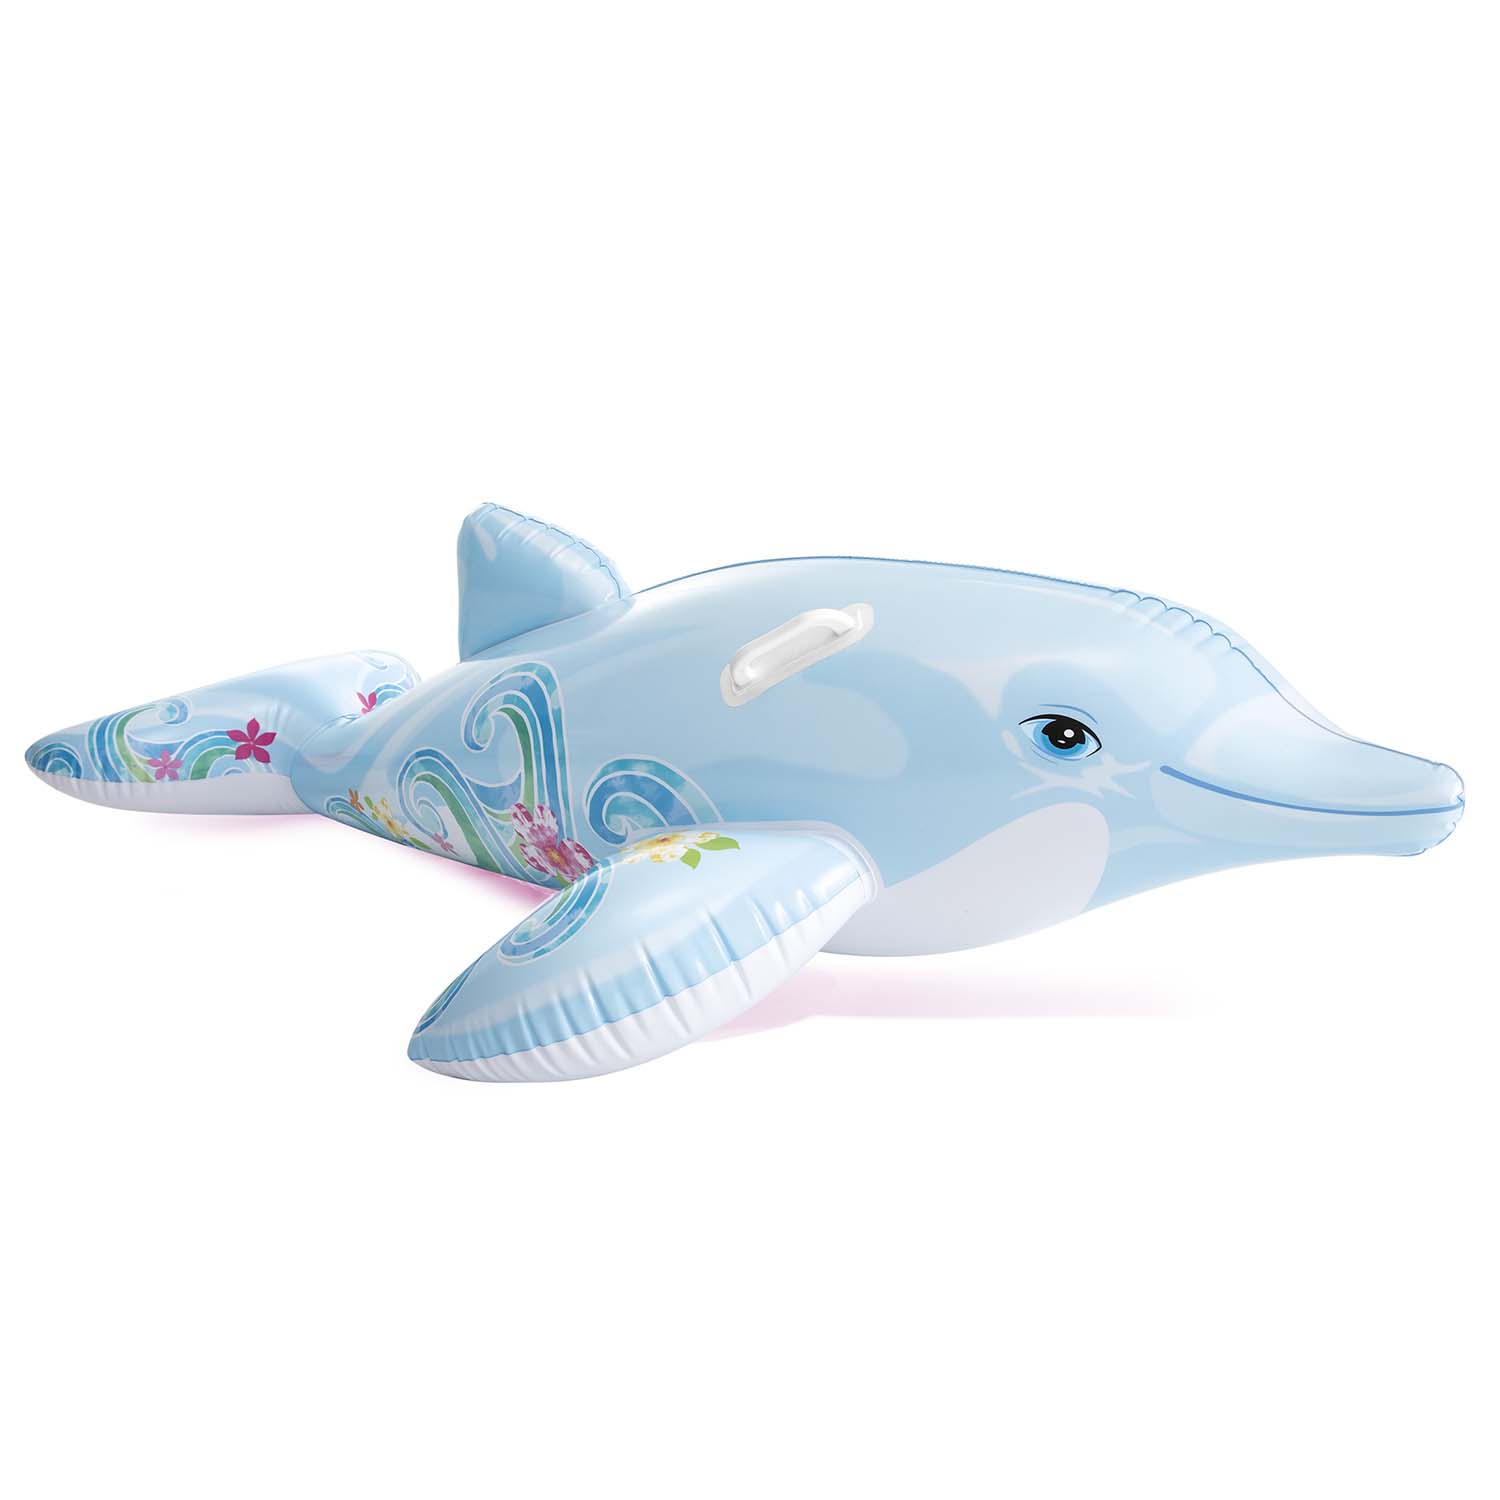 Zabawka dmuchana Delfin niebieski 175 x 66 cm INTEX 58535-N